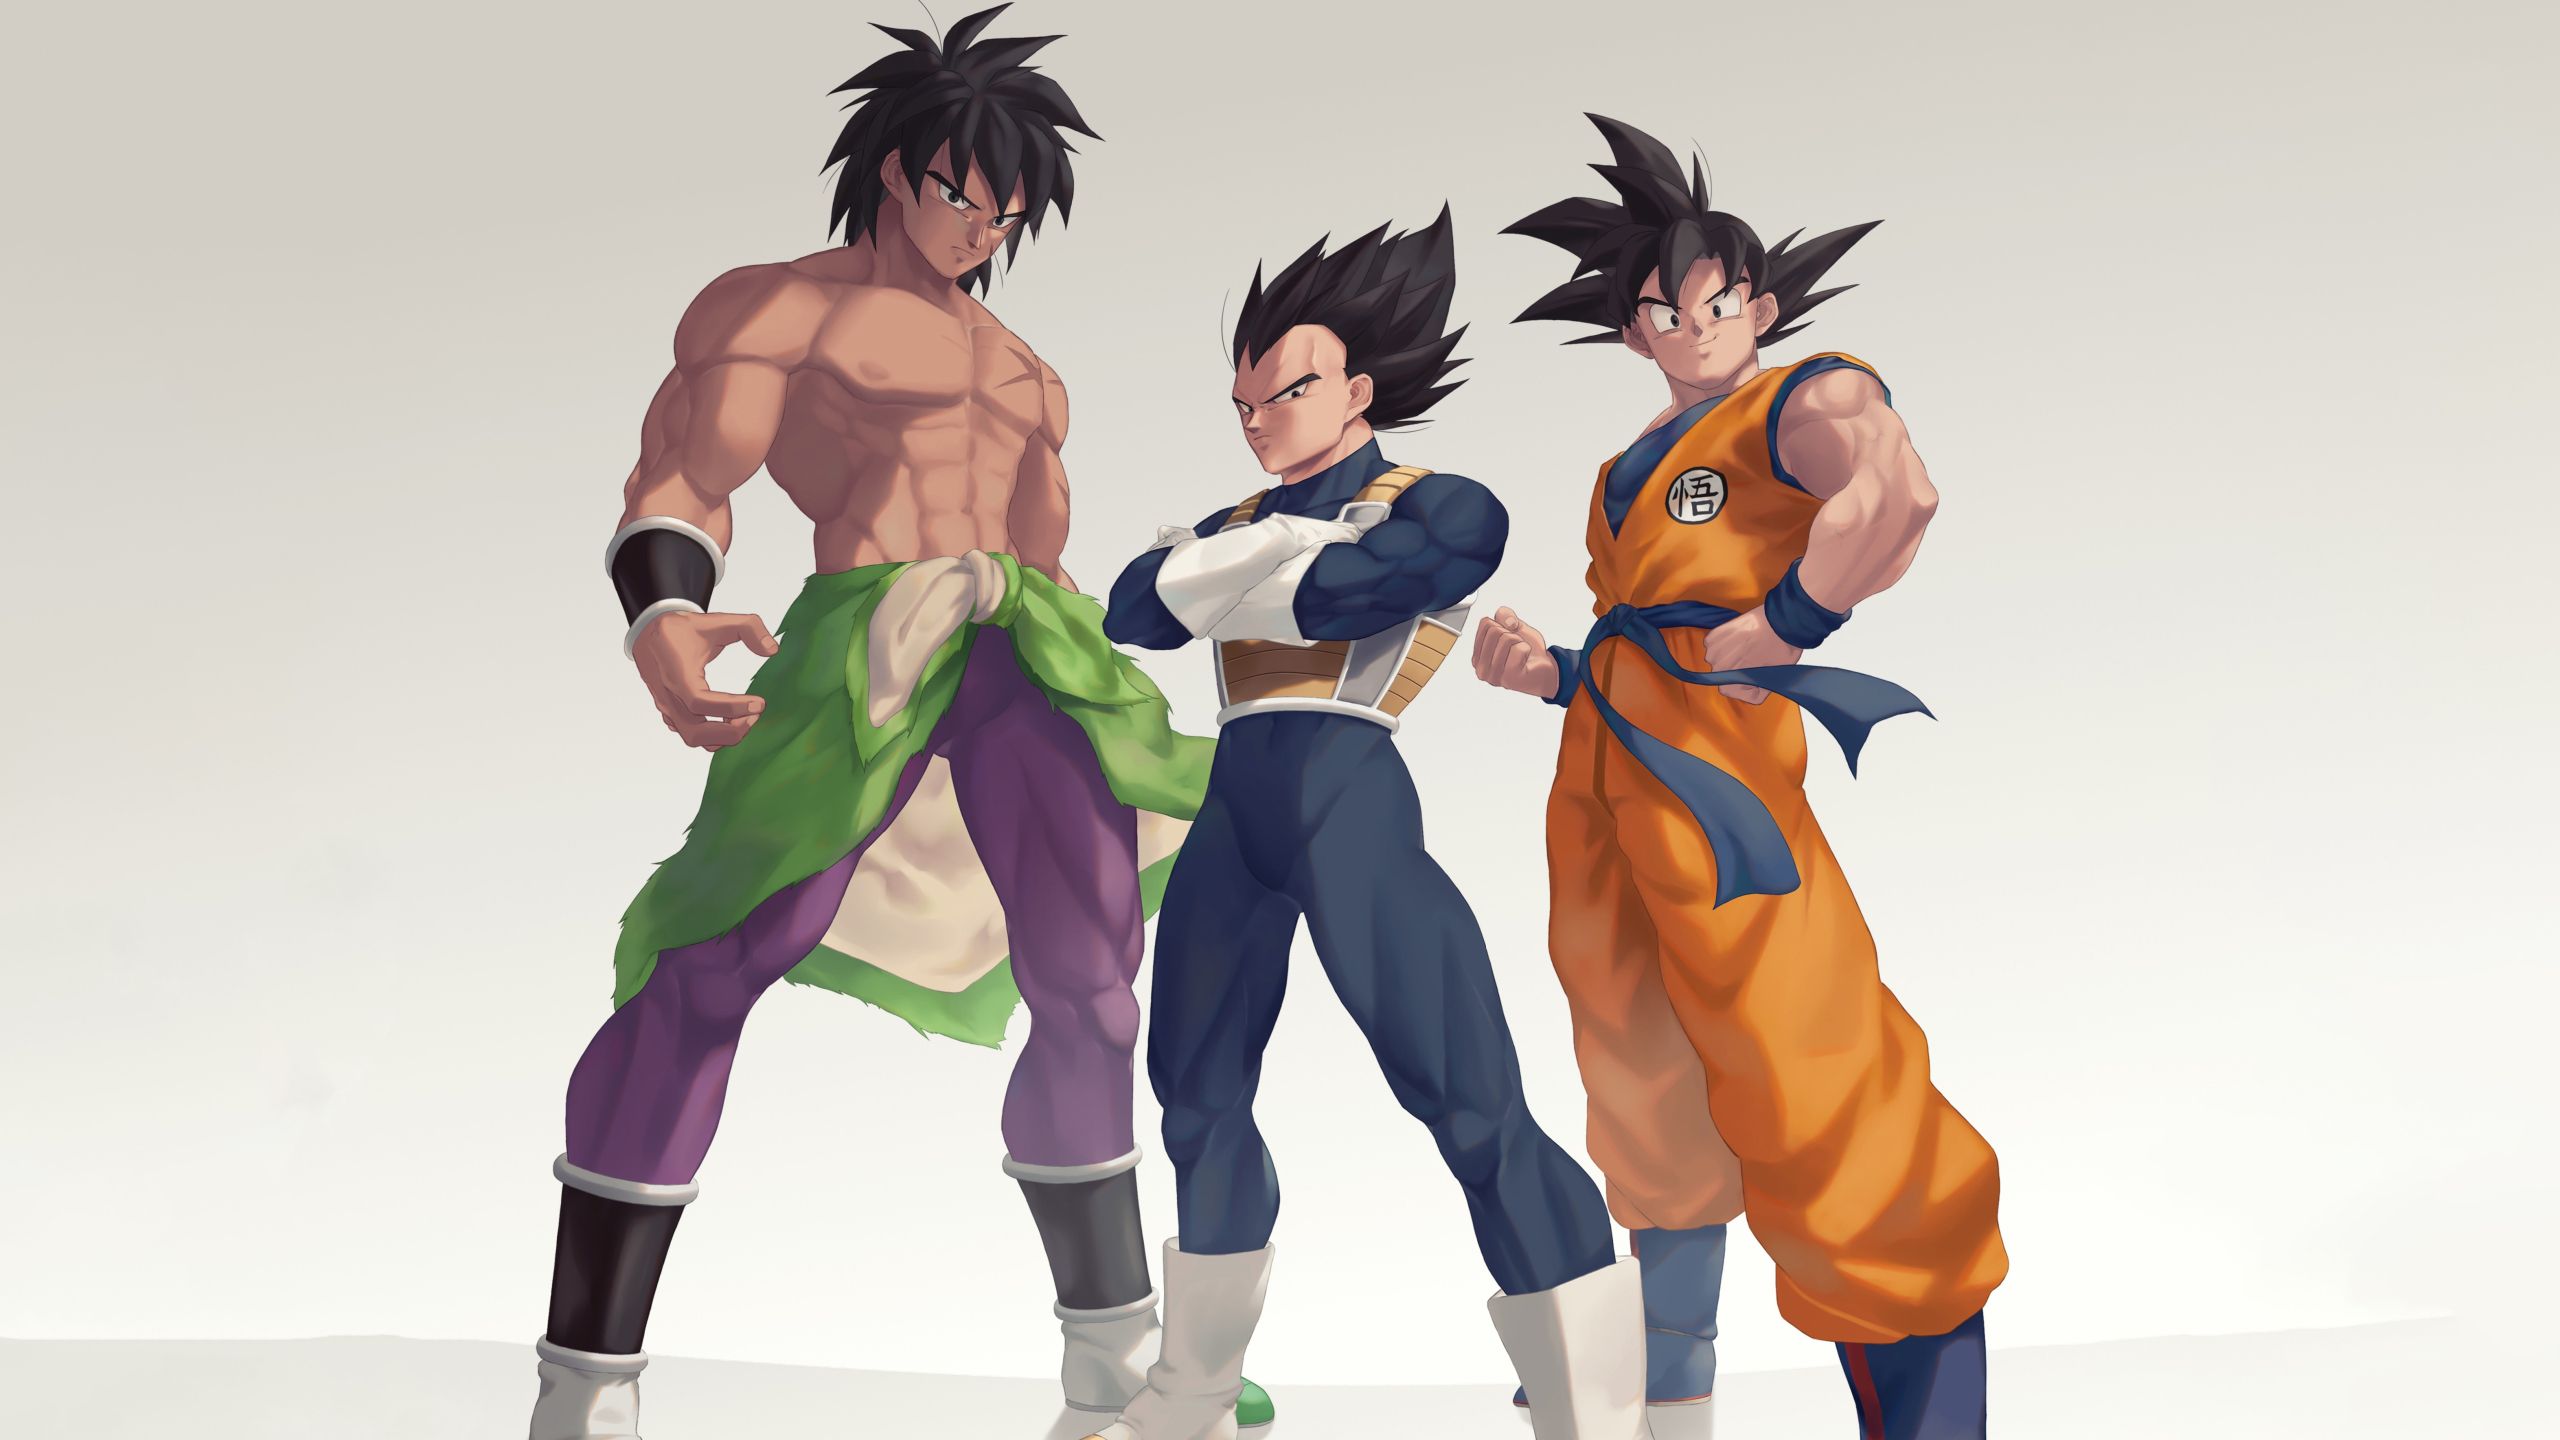 Broly Goku and Vegeta 1440P Resolution Wallpaper, HD Anime 4K Wallpaper, Image, Photo and Background